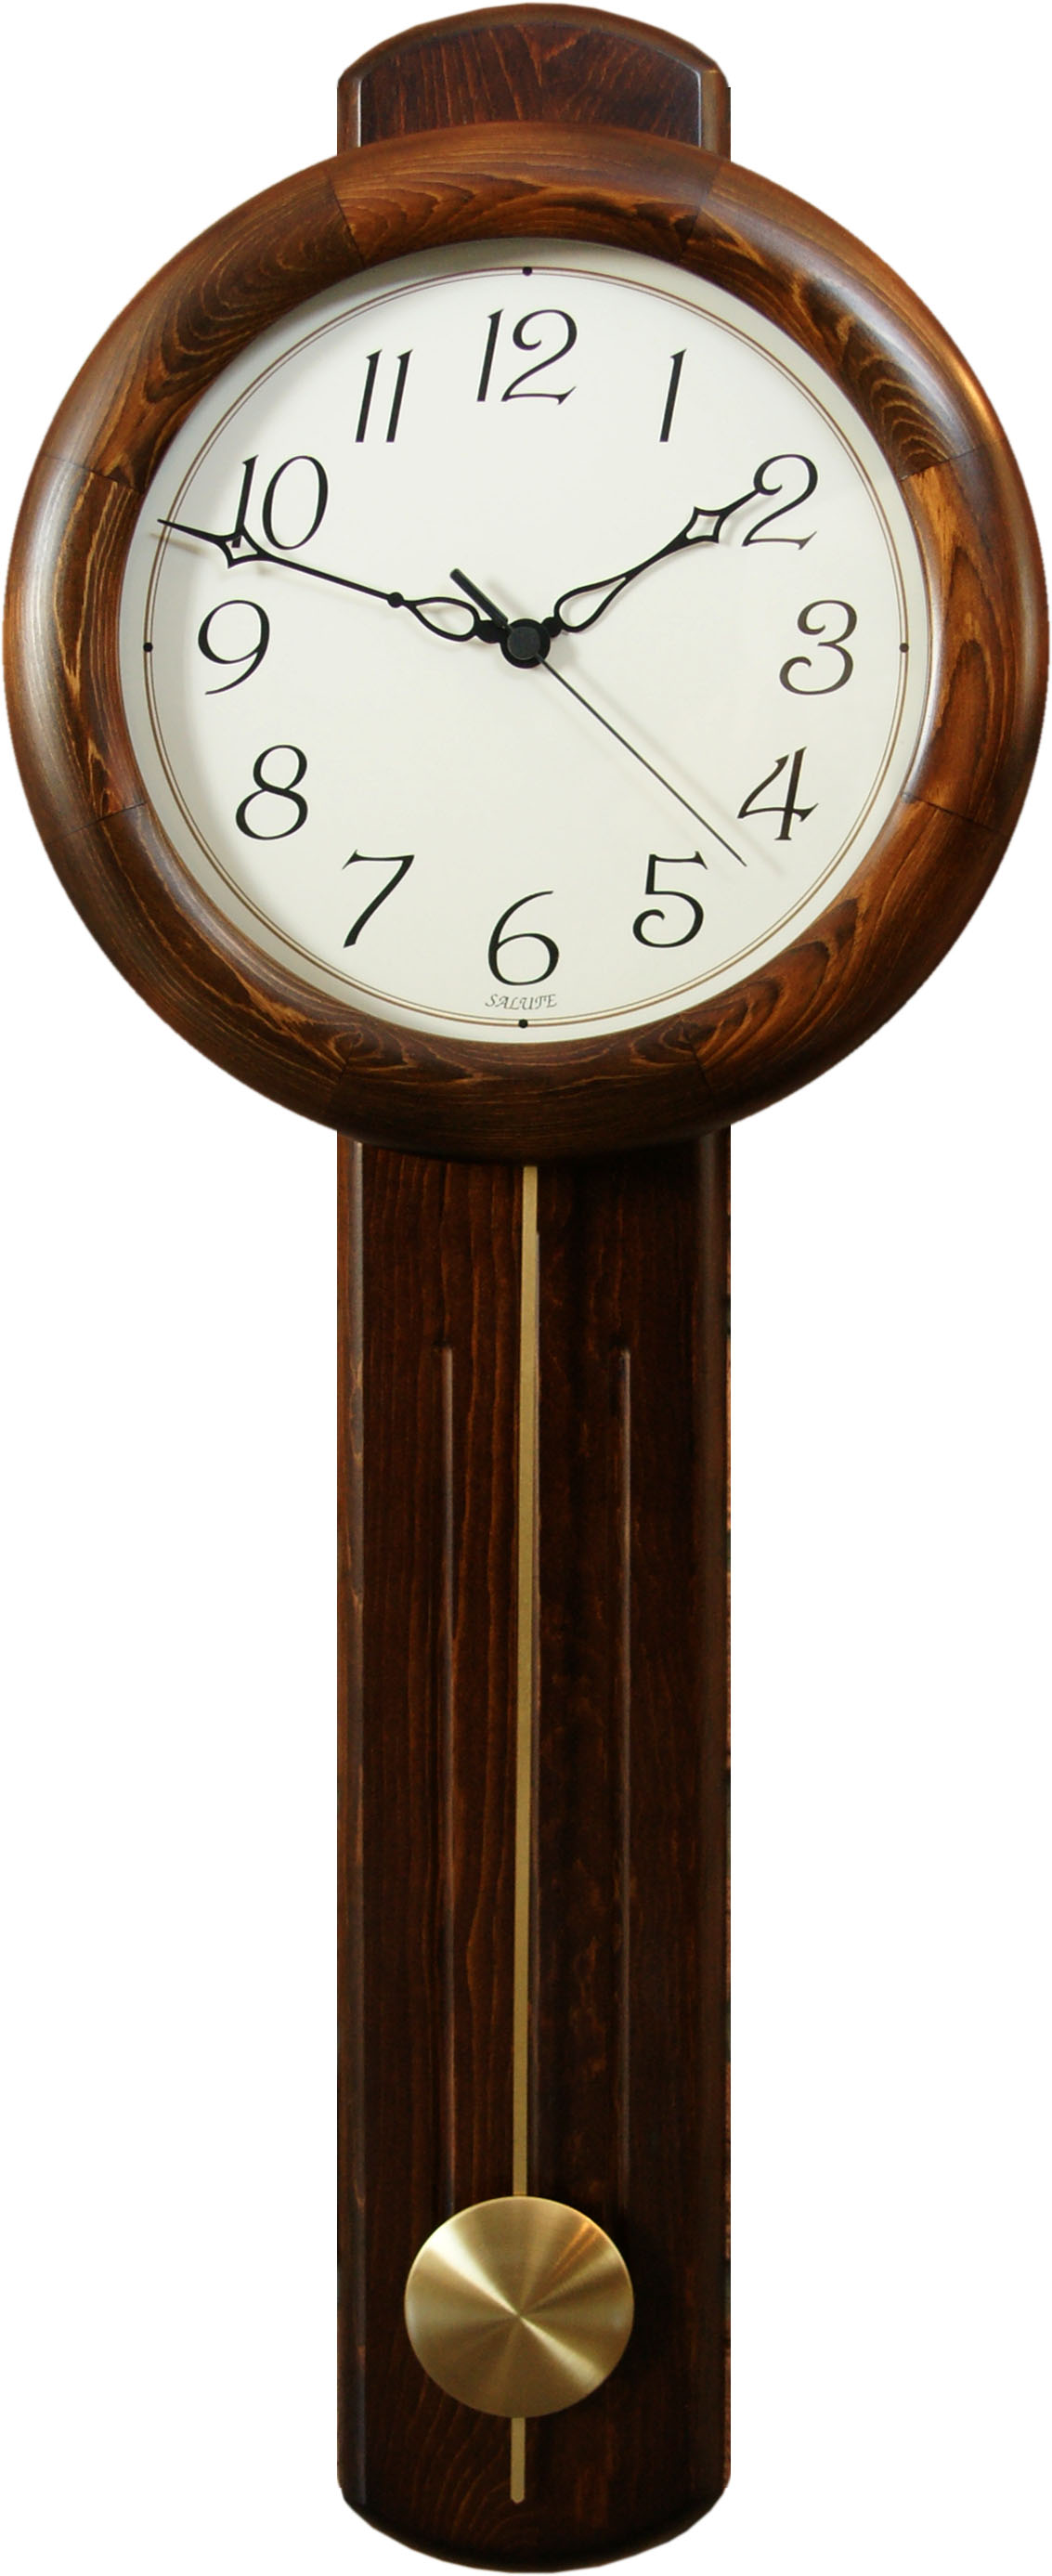 Часы с маятником недорого. Часы Hermle настенные с маятником. Часы кварцевые настенные Salute с маятником ДС-1мб7-803. Настенные часы с маятником Дельта кварц. Часы Lulu настенные с маятником.